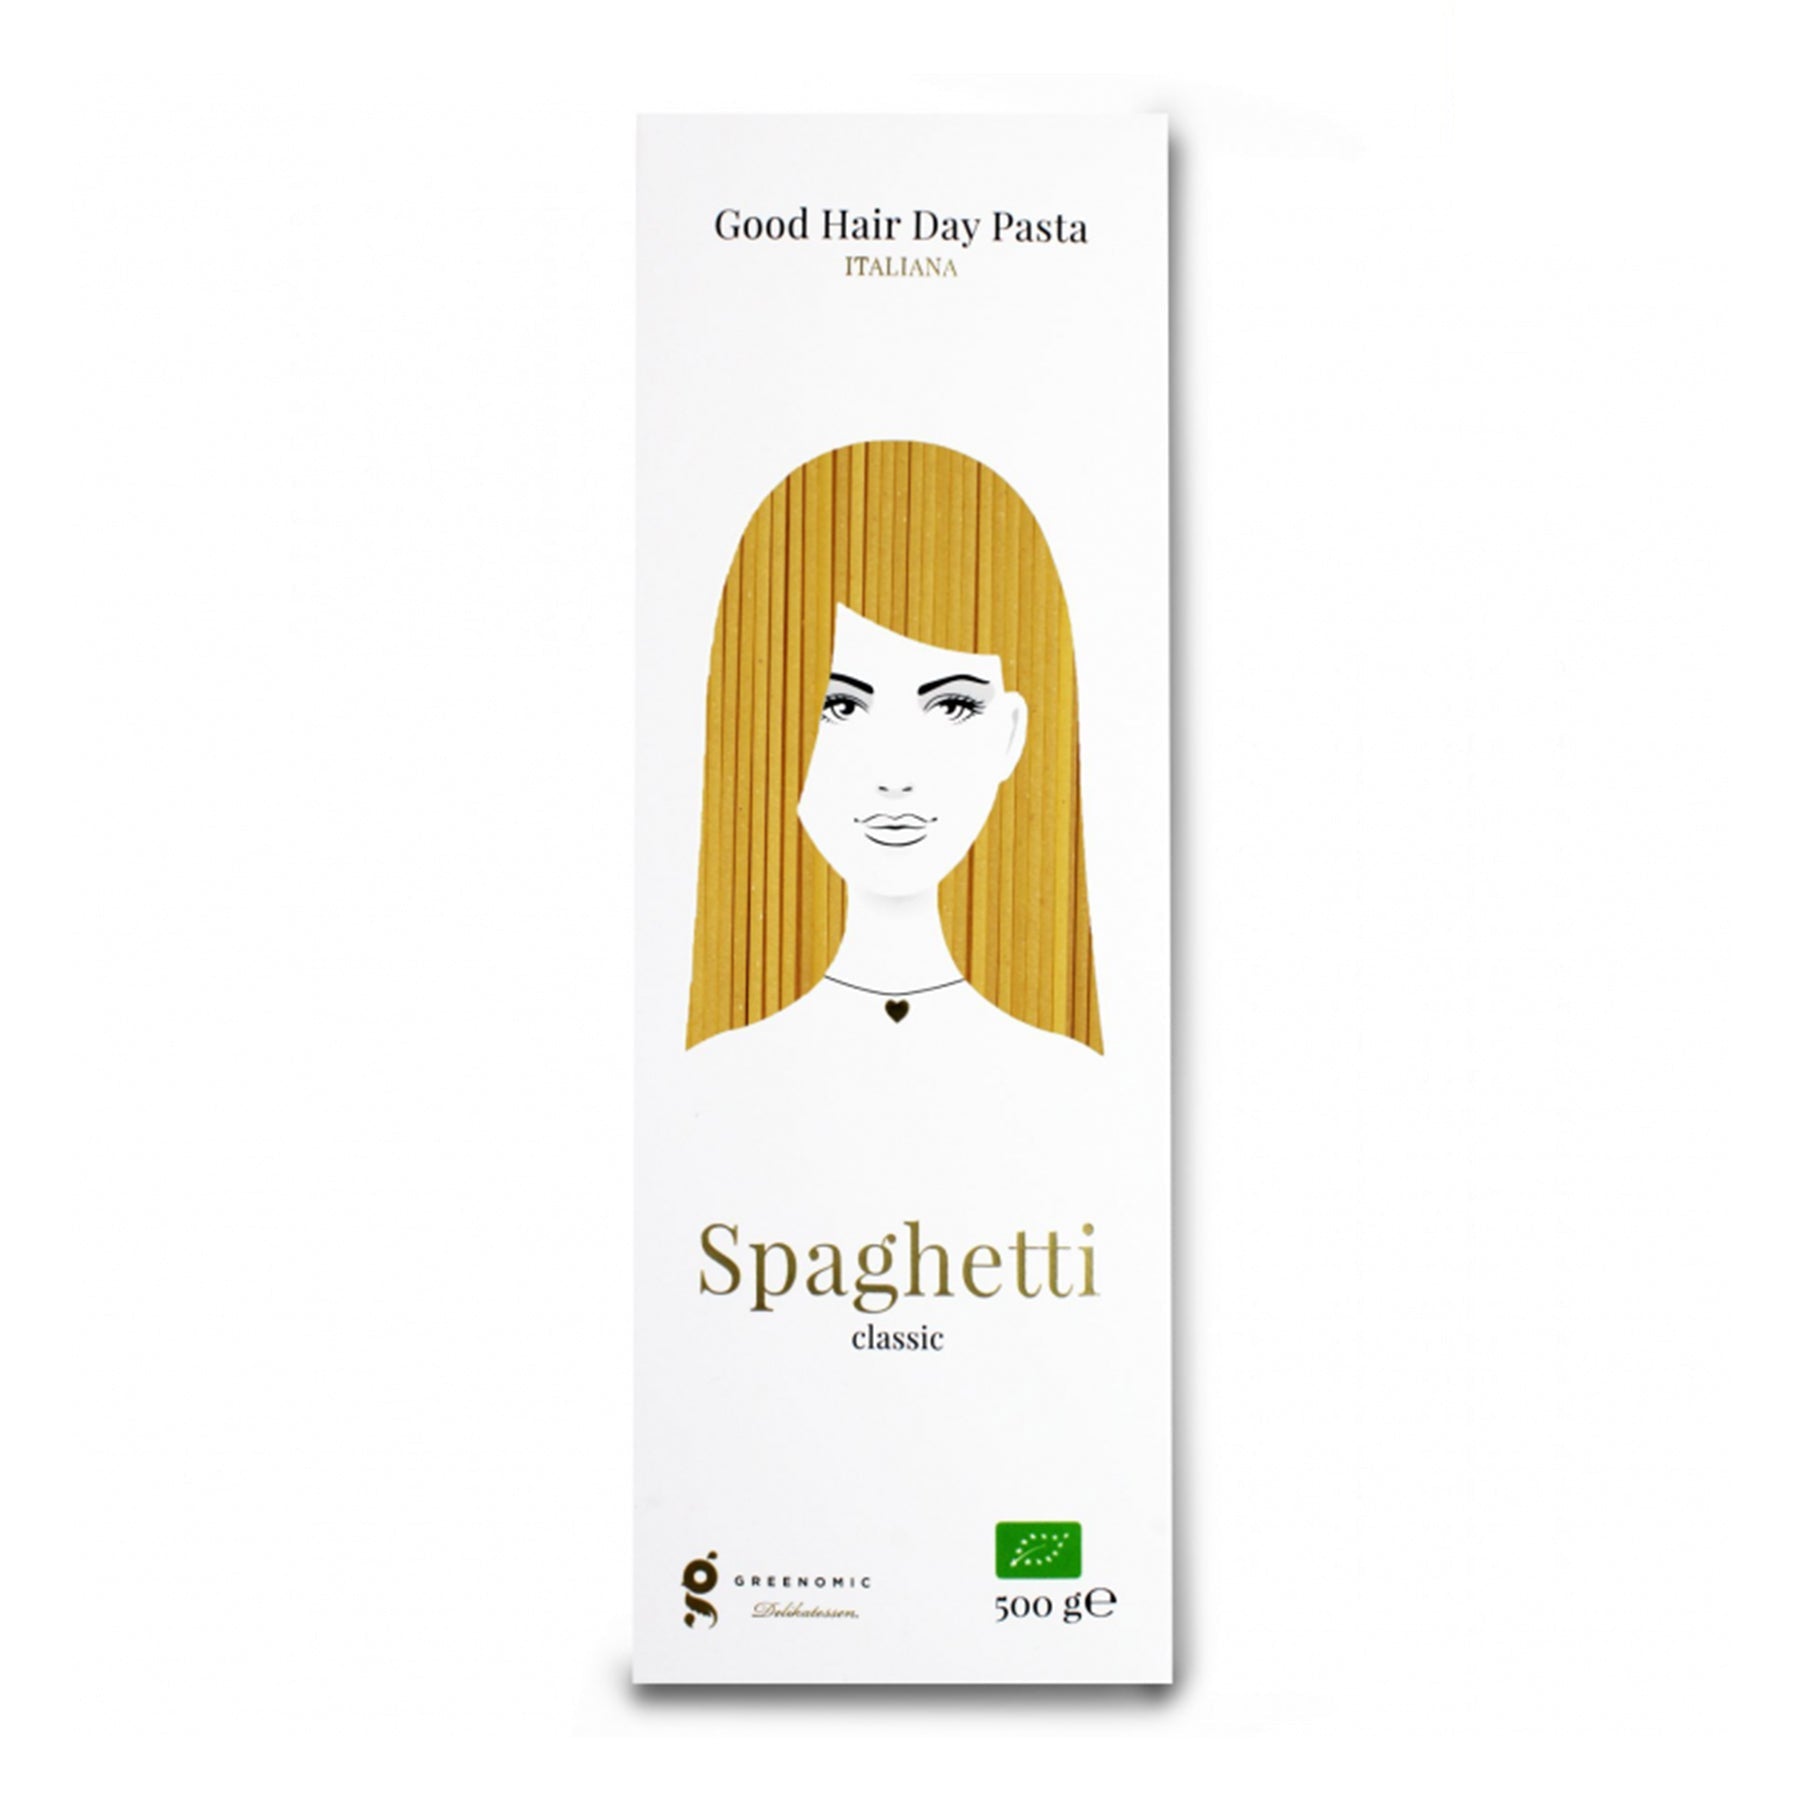 Spaghetti Classic BIO - Good Hair Day Pasta - Genussbote